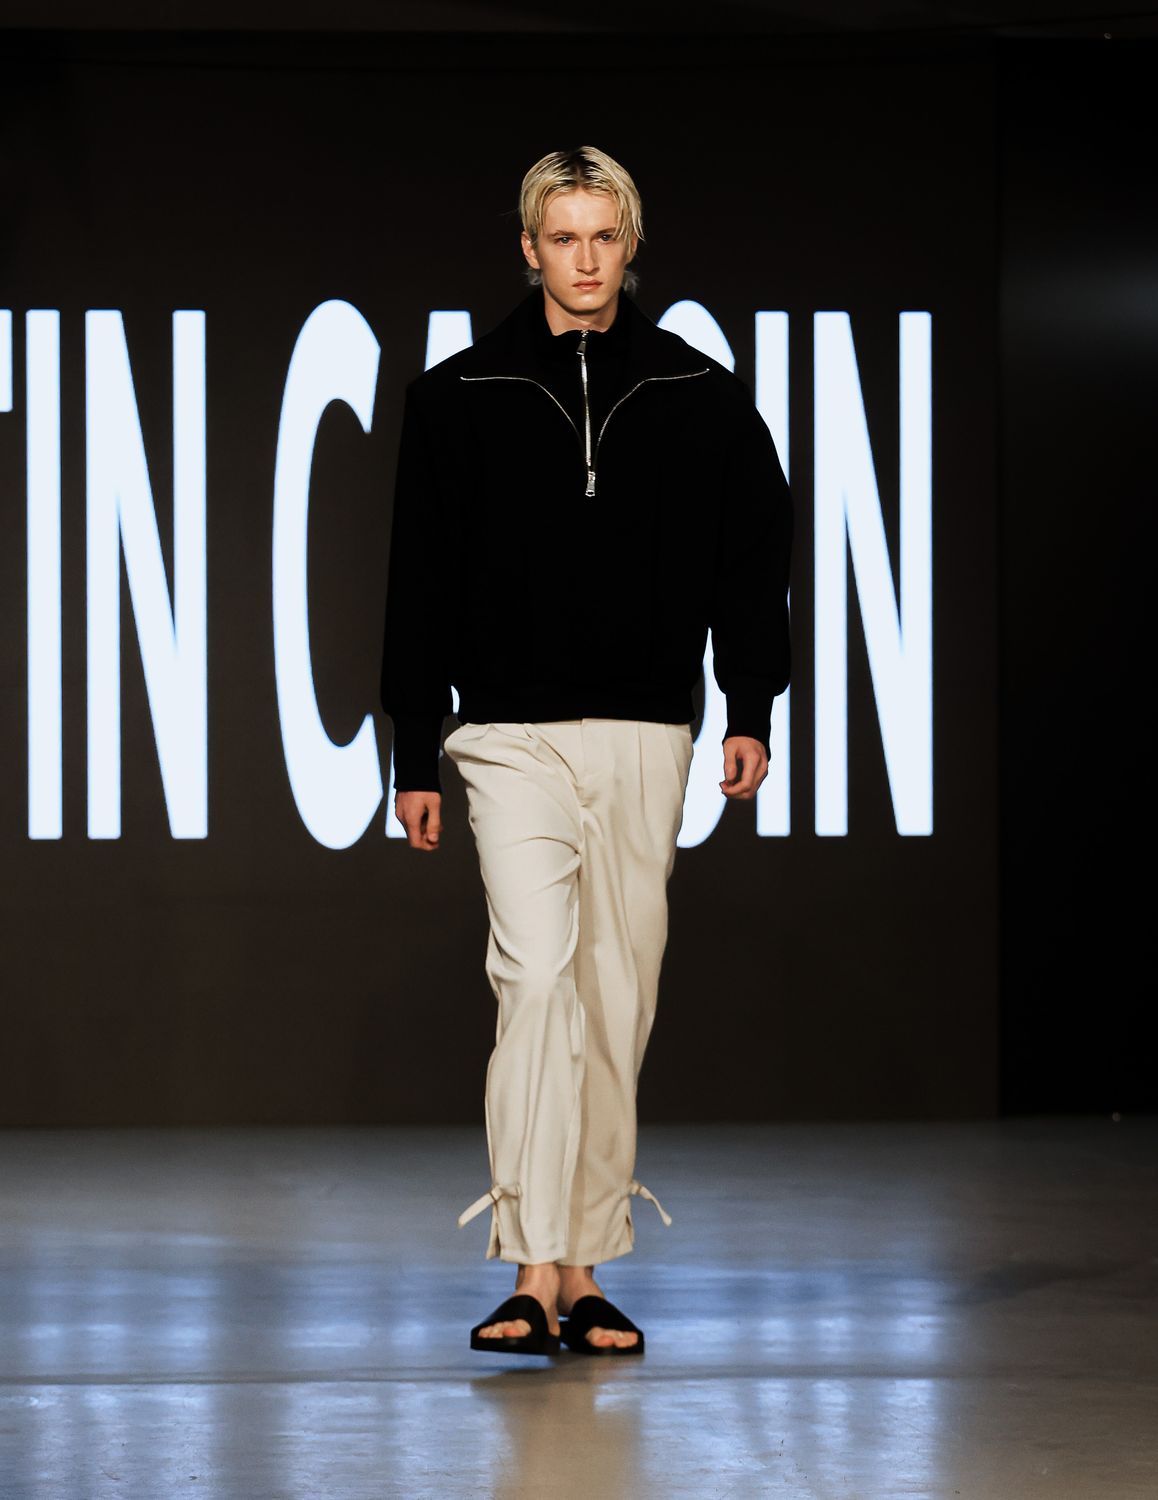 Justin Cassin at London Fashion Week Men's 2022